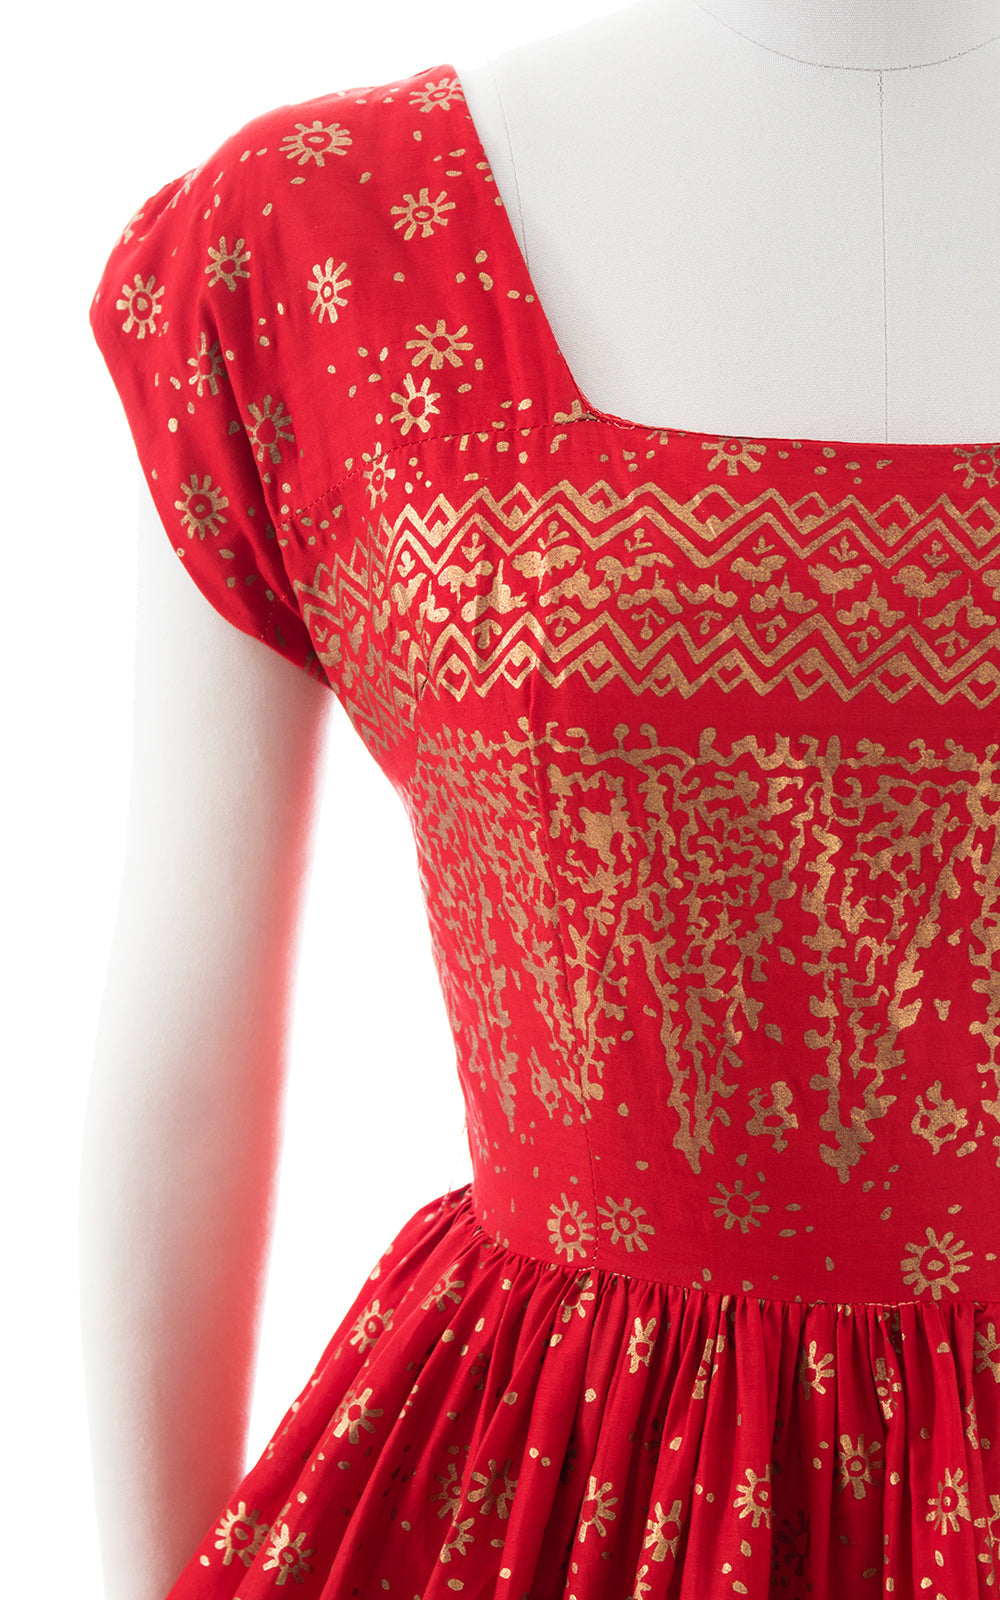 1950s Metallic Gold & Red Cotton Dress